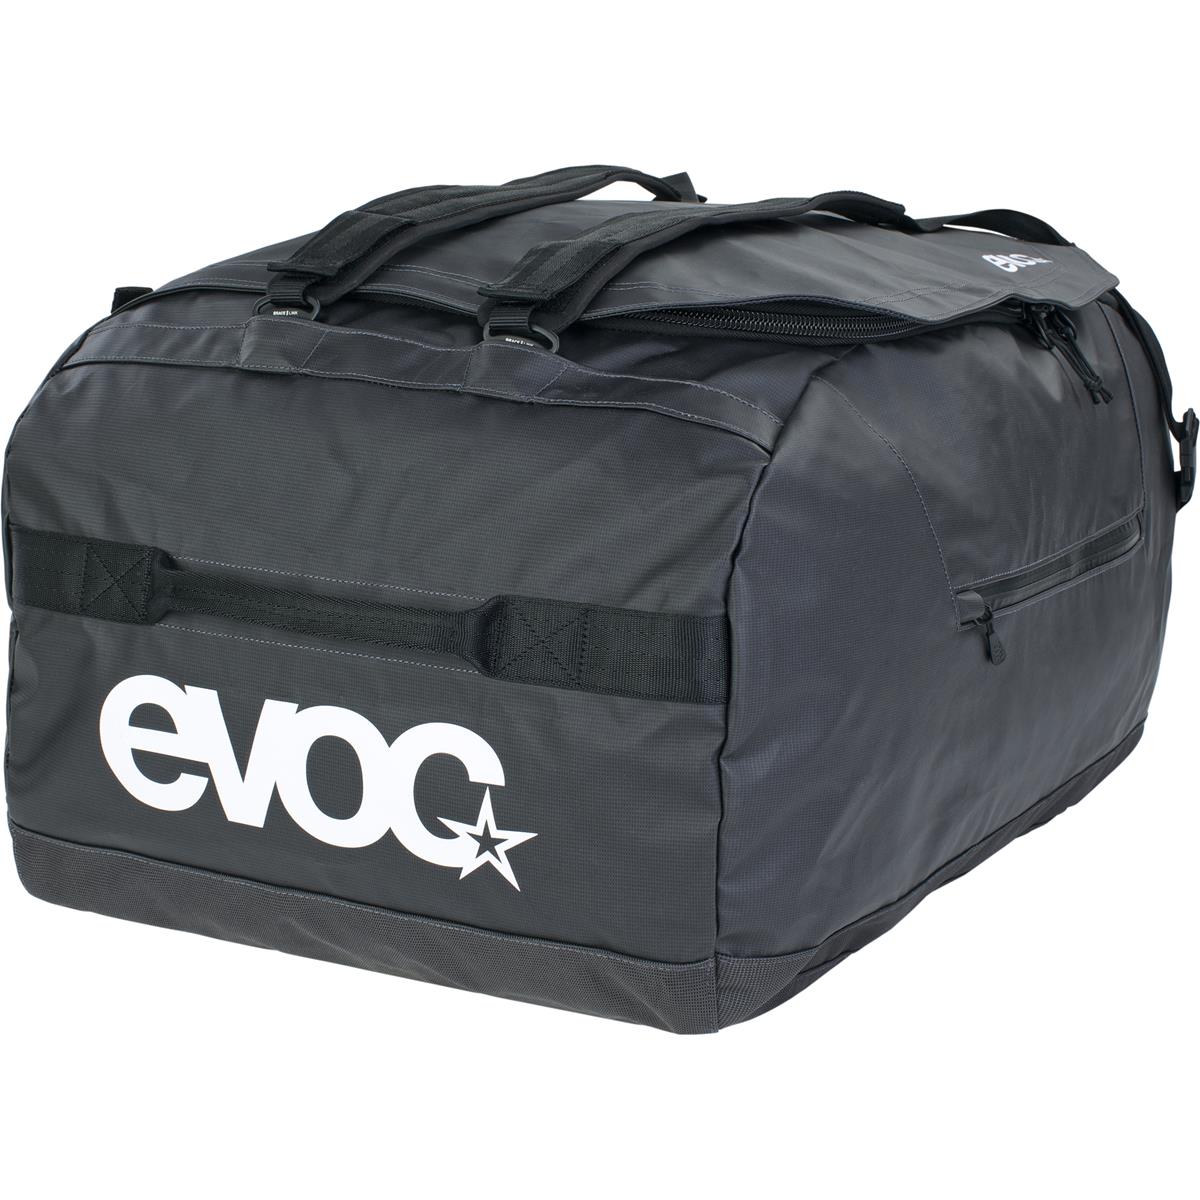 Evoc Duffle Bag Duffel Bag 100 Carbon Gray/Black